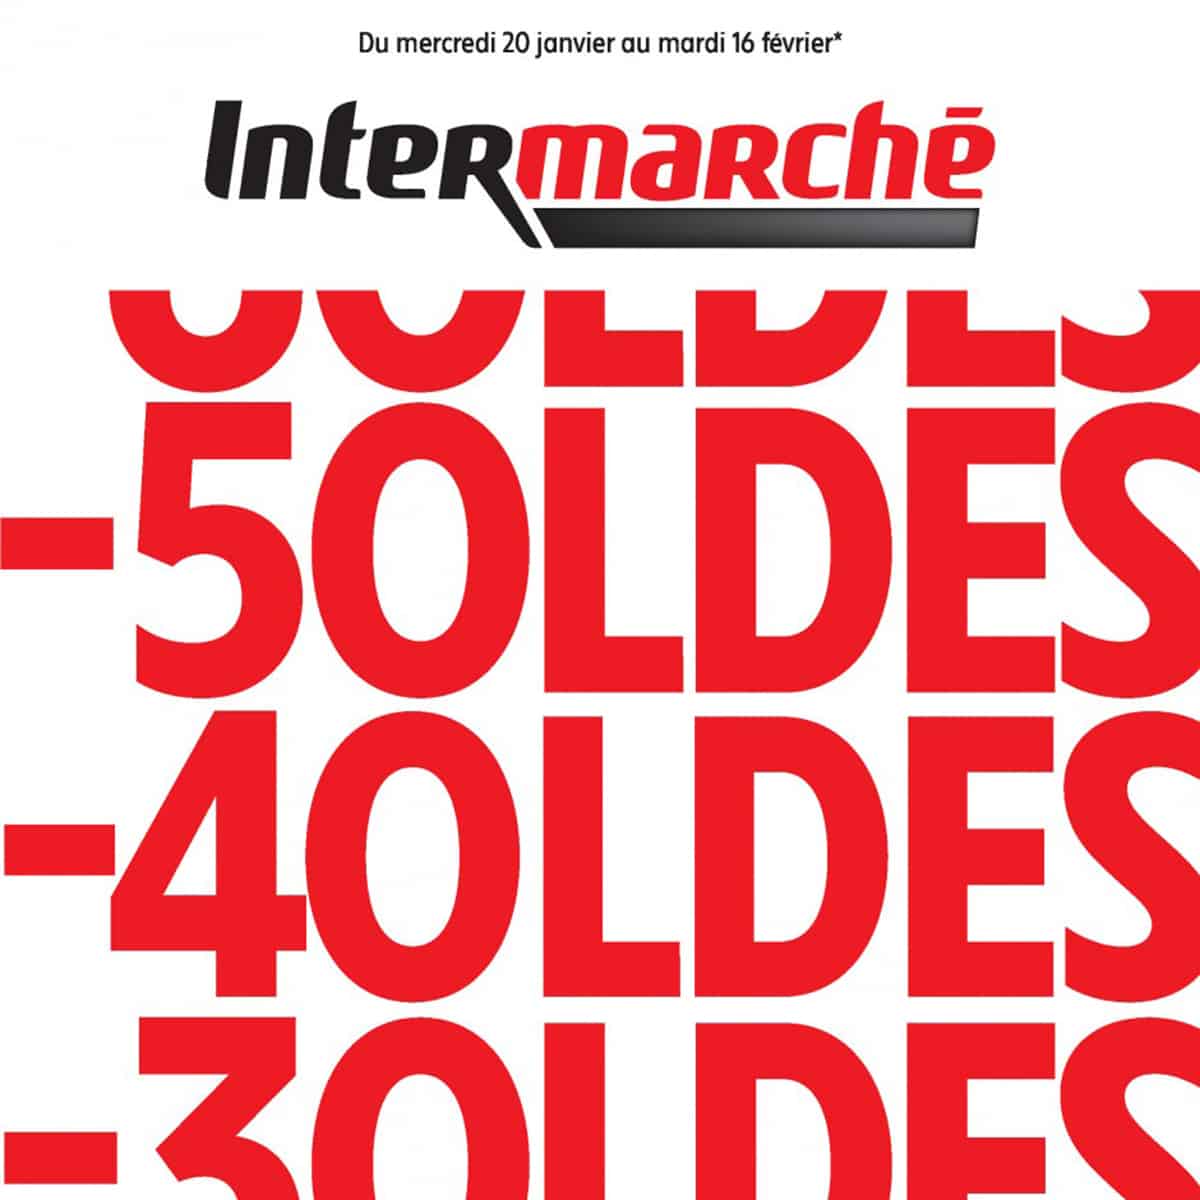 Catalogue Soldes Intermarche 2021 Jusqu A 50